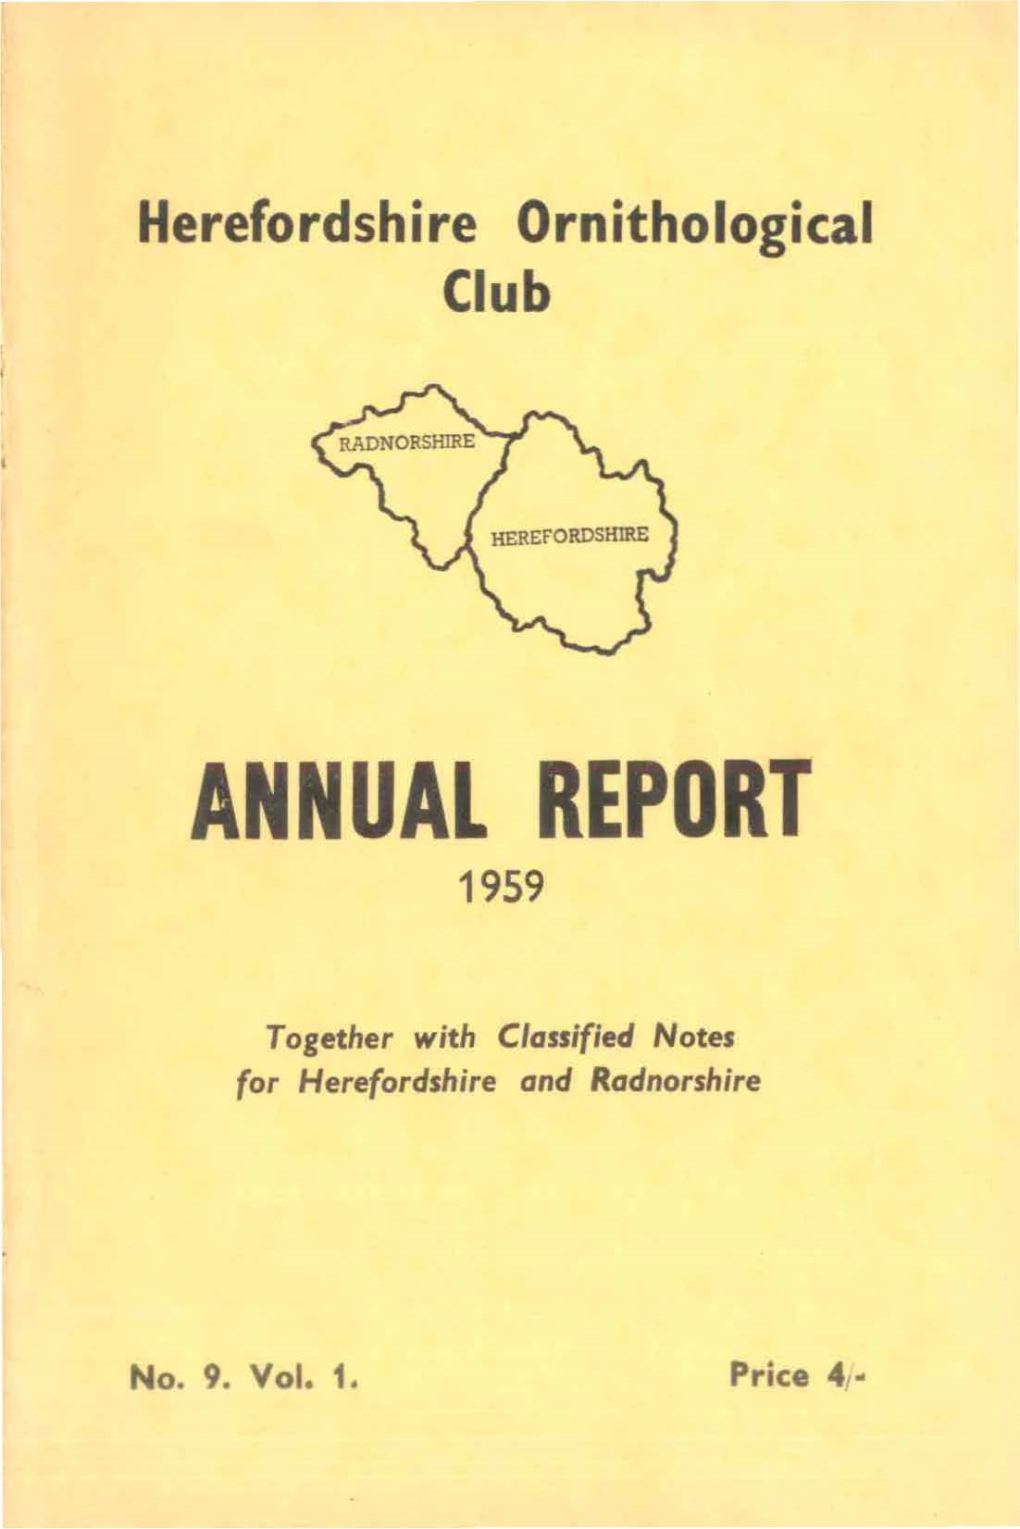 Annual Report 1959